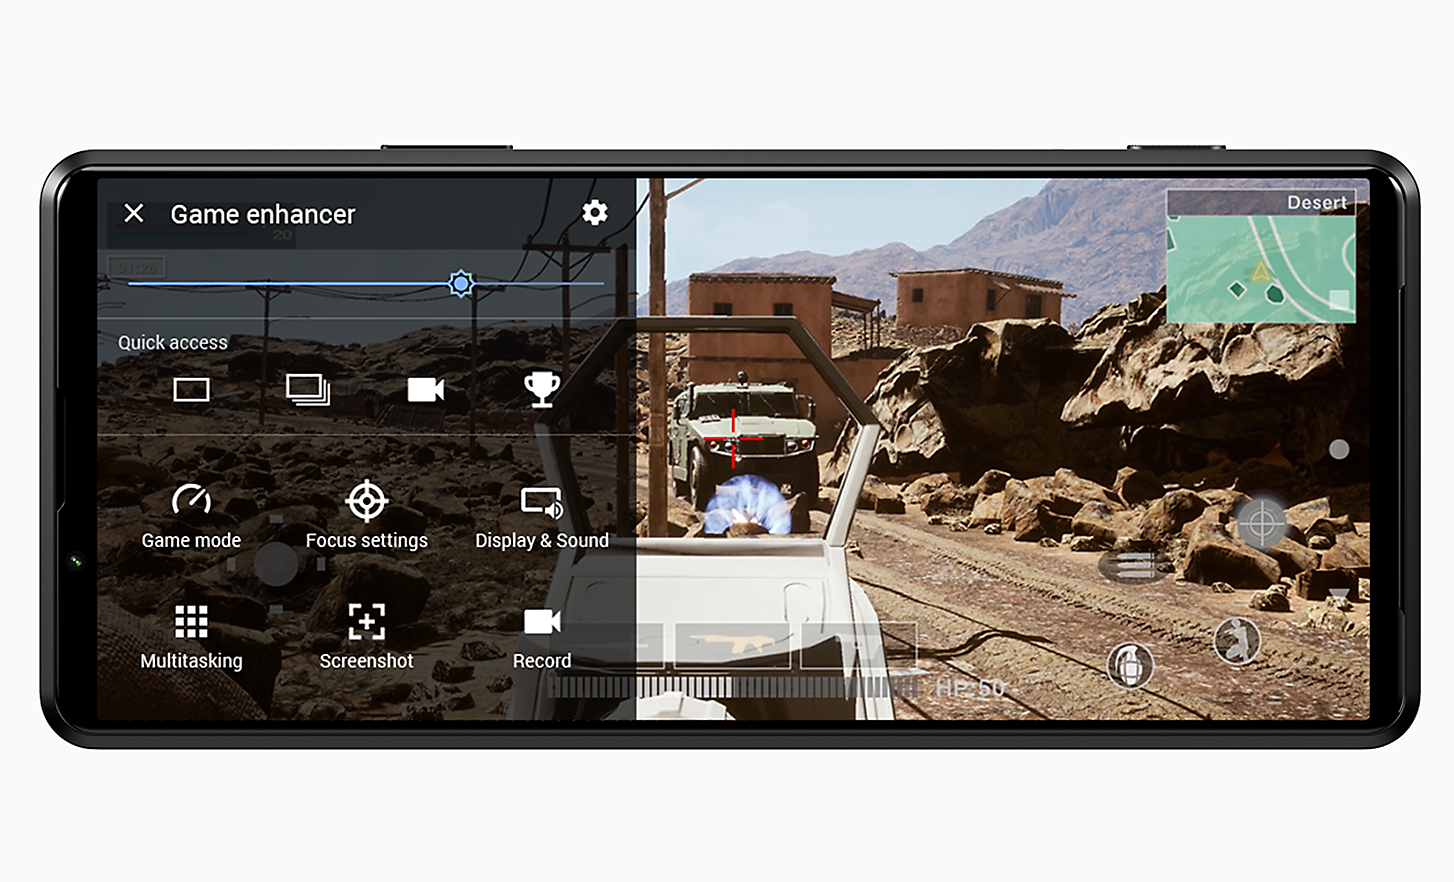 Xperia smartphone displaying Game enhancer UI